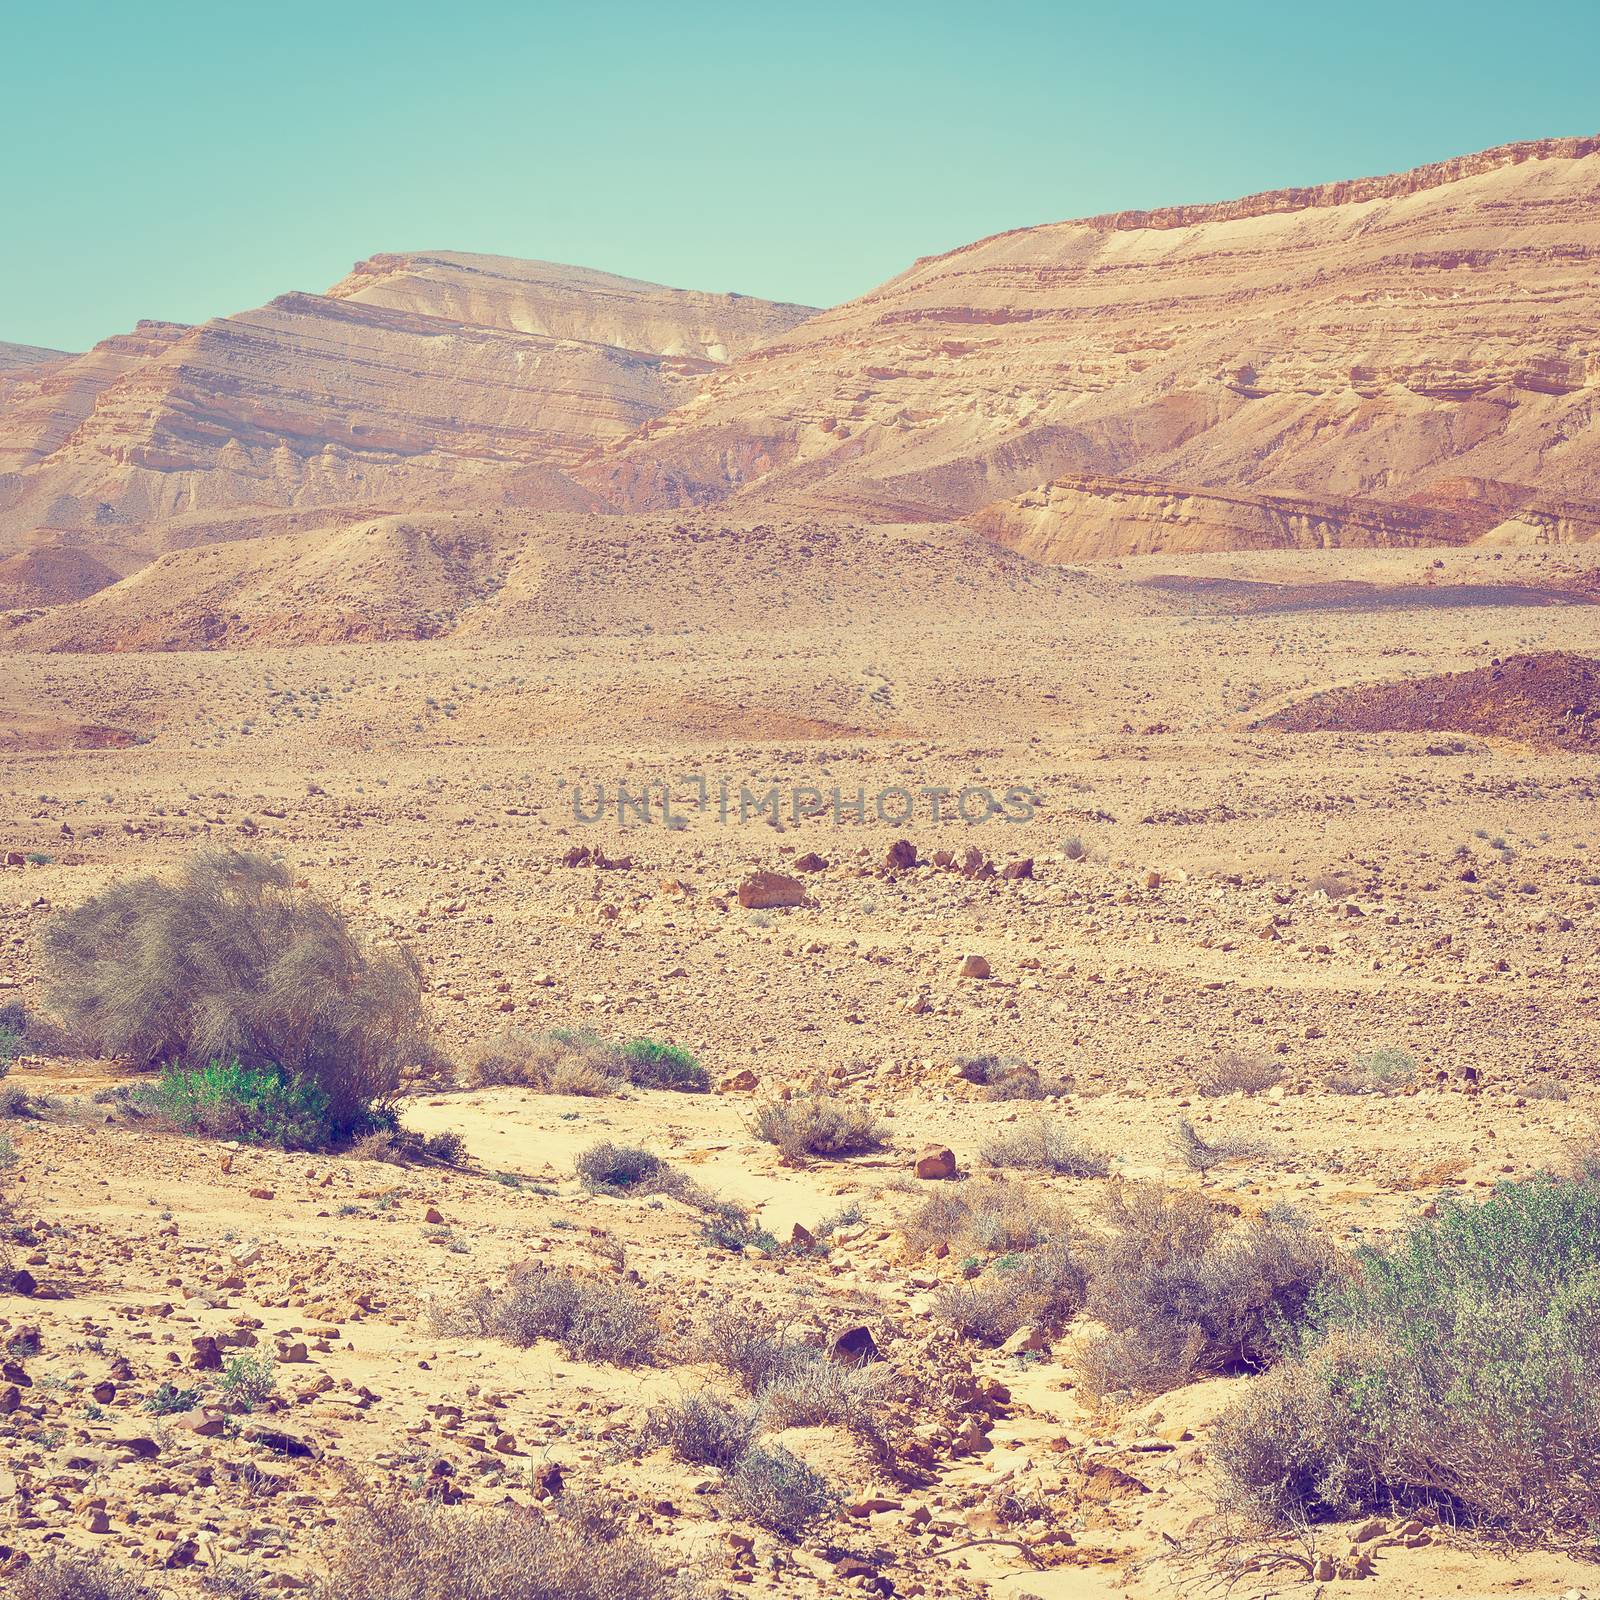 Green Plants of the Negev Desert in Israel, Instagram Effect